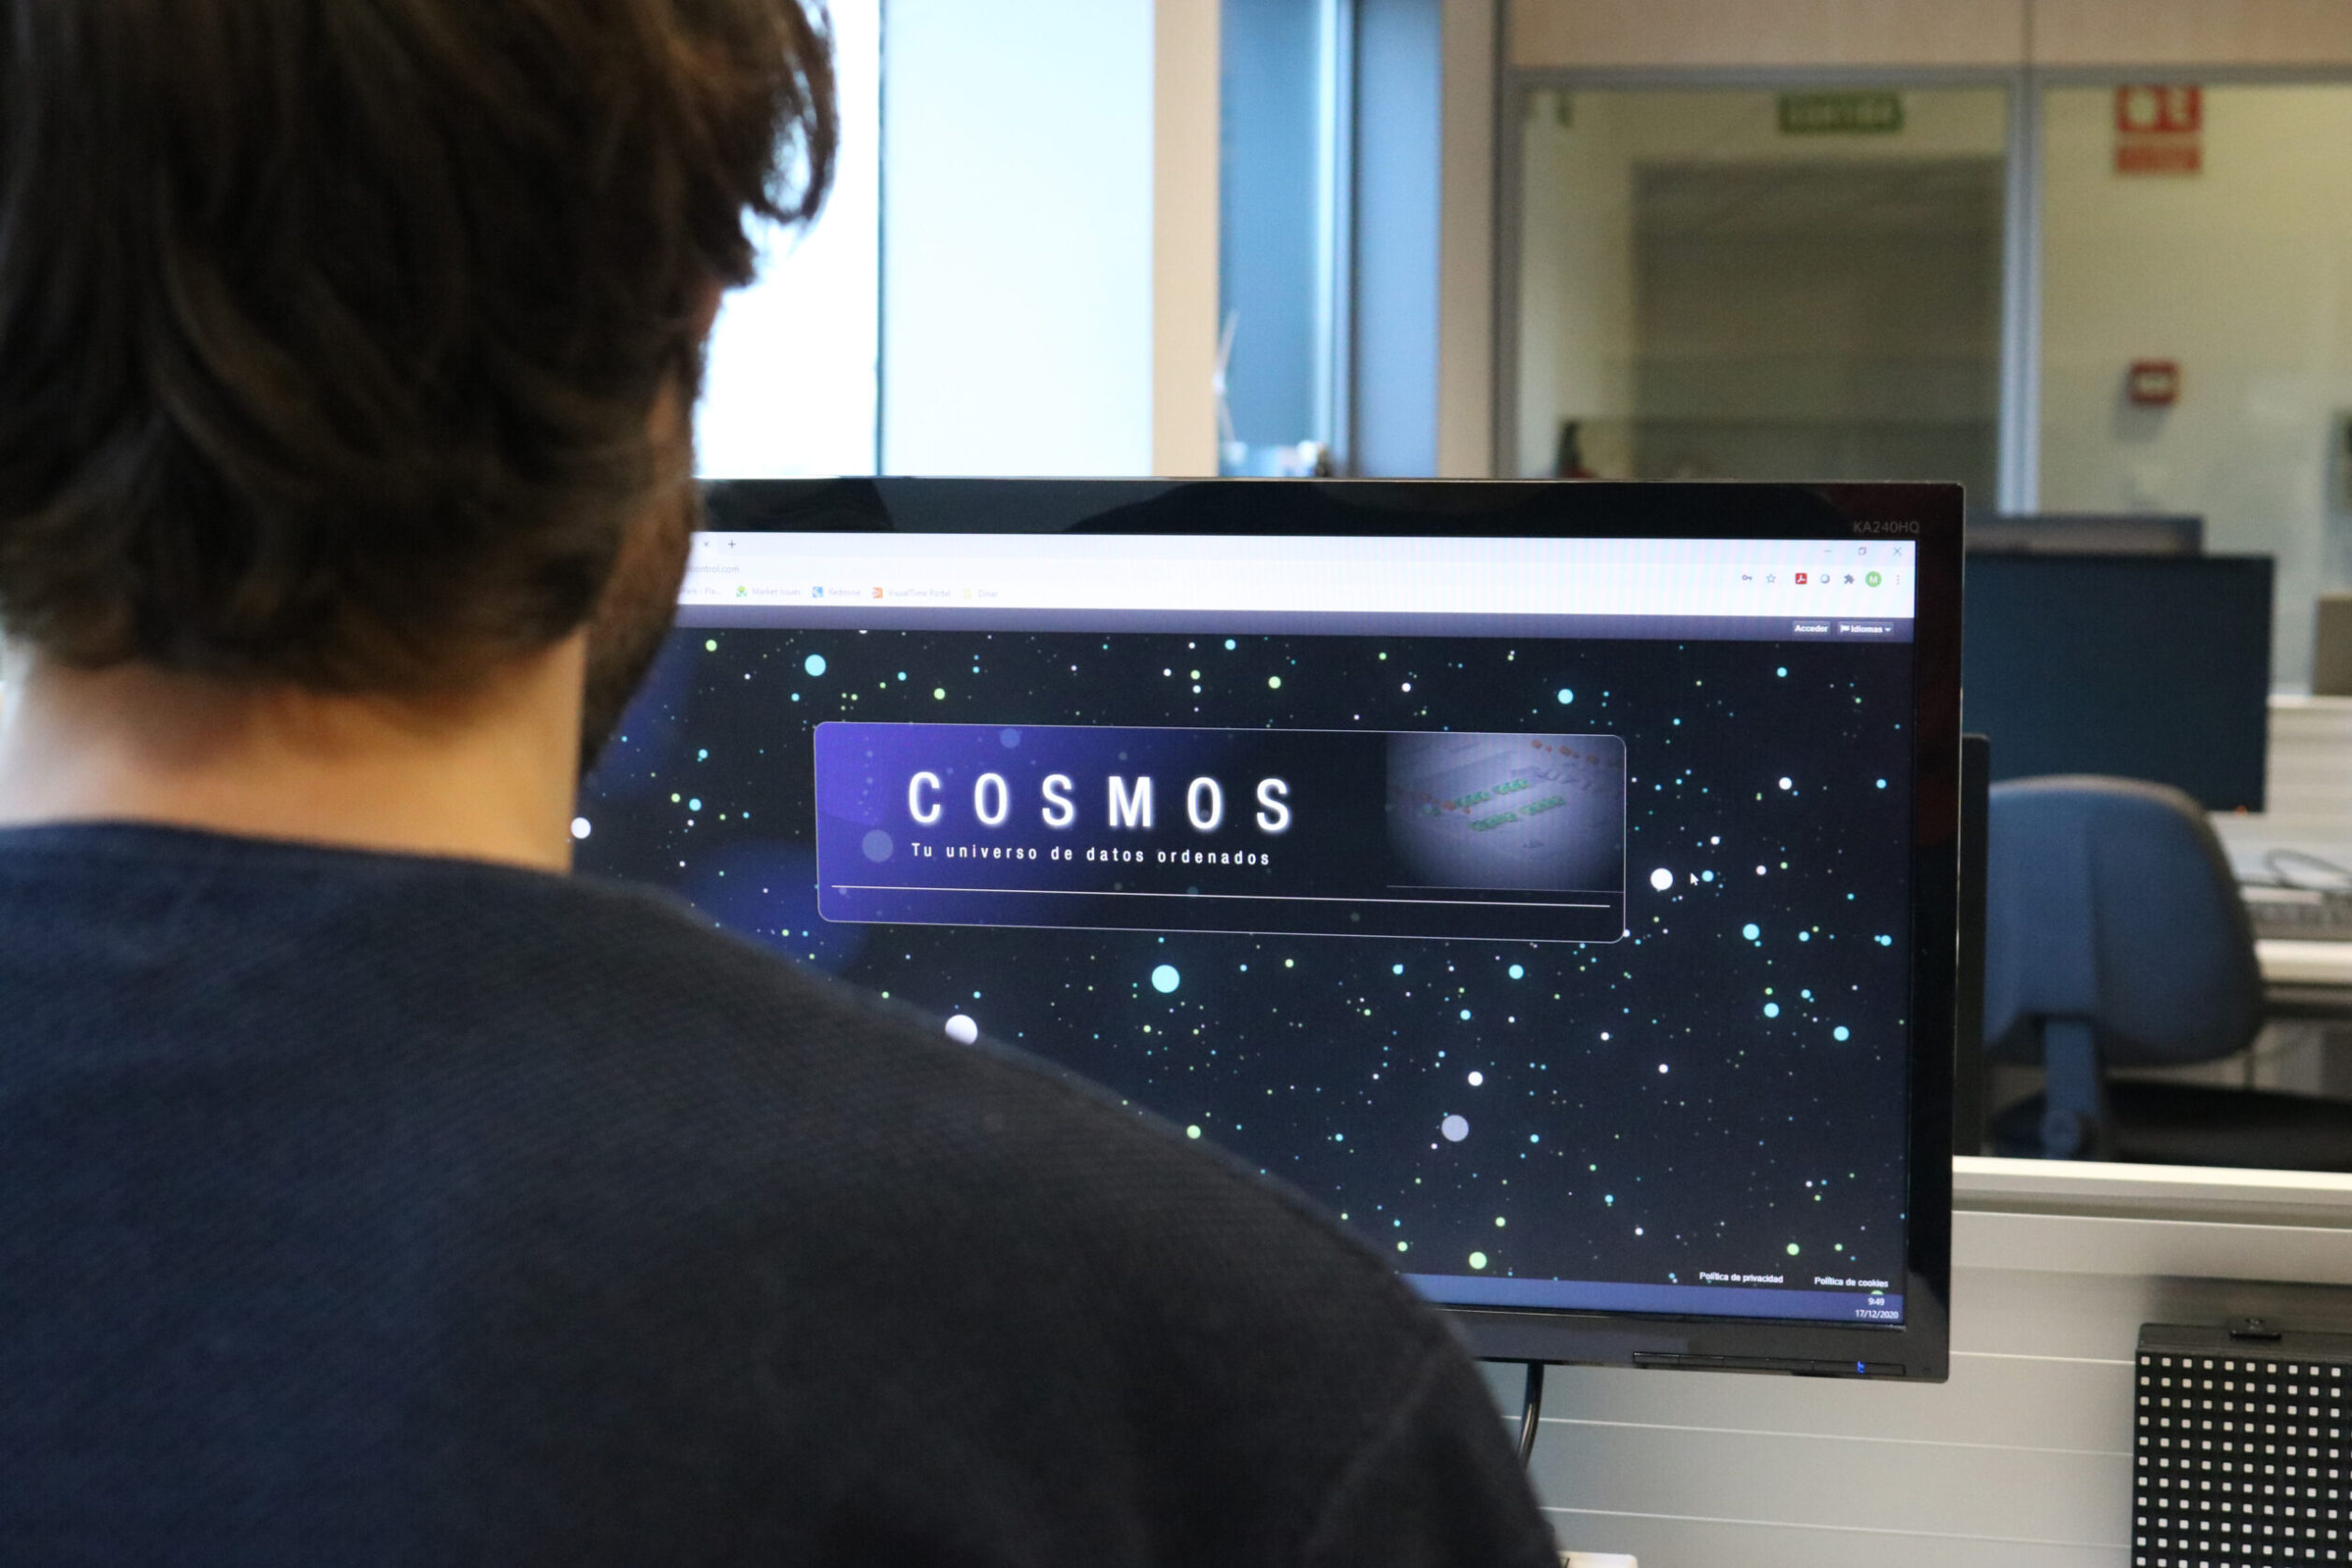 Circontrol’s platform COSMOS adds new functionalities